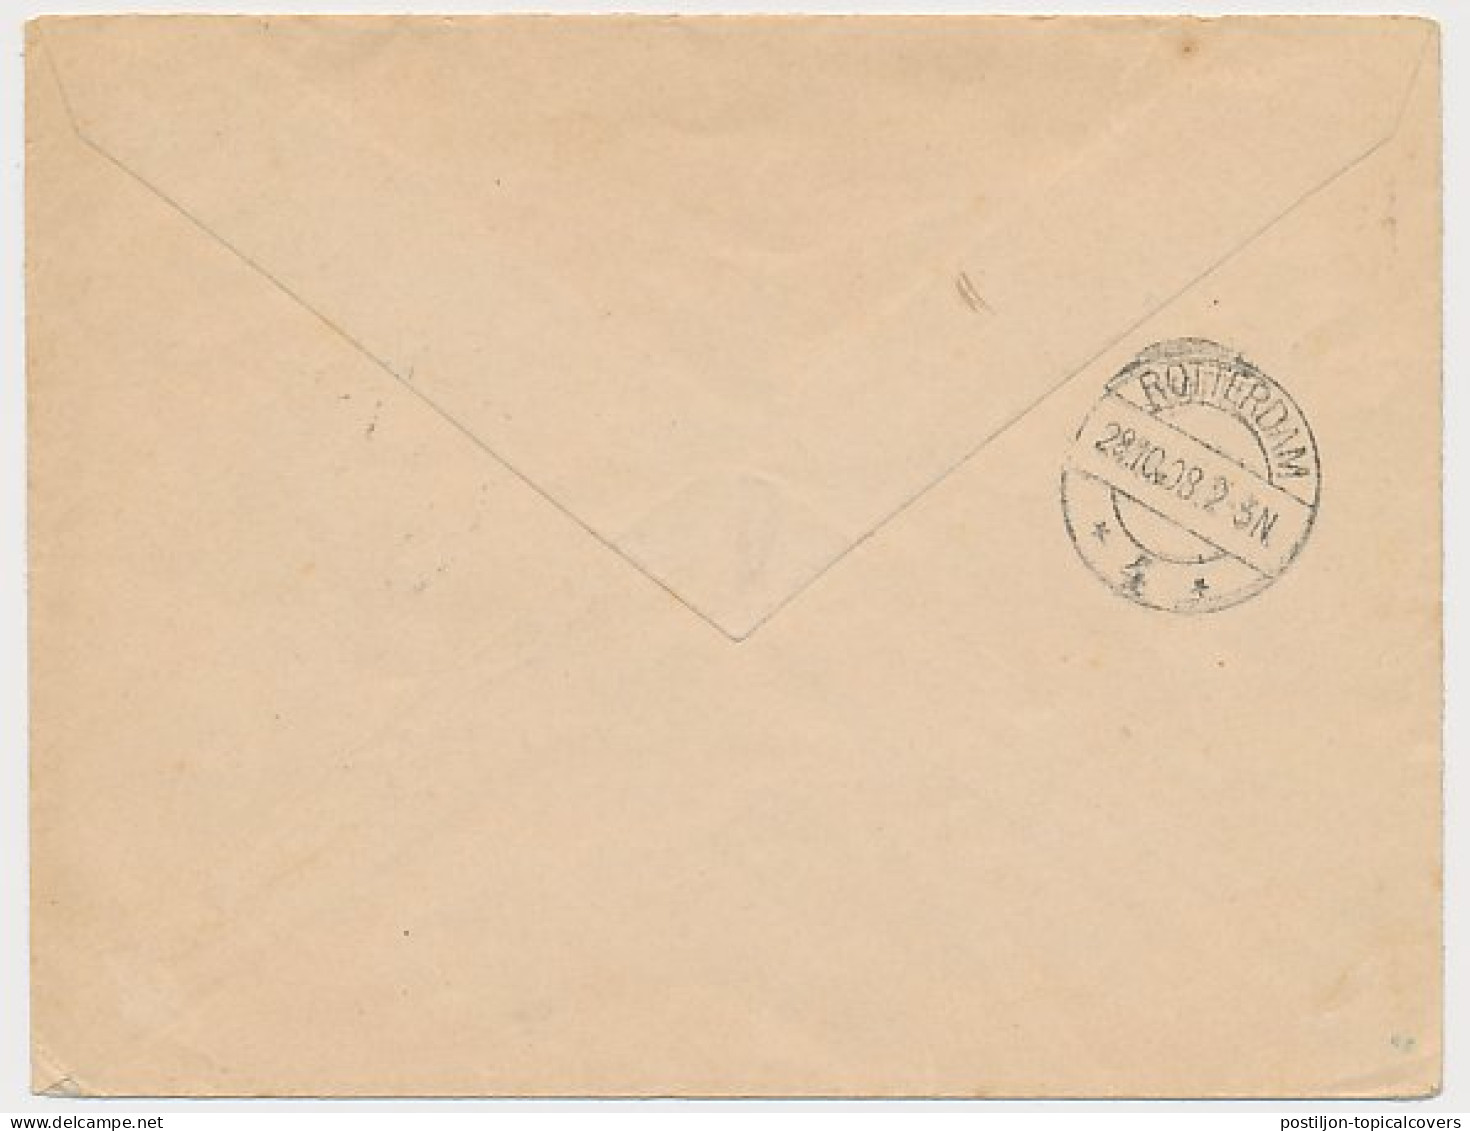 Envelop G. 9 / Bijfrankering Aangetekend Bloemendaal 1908 - Postal Stationery